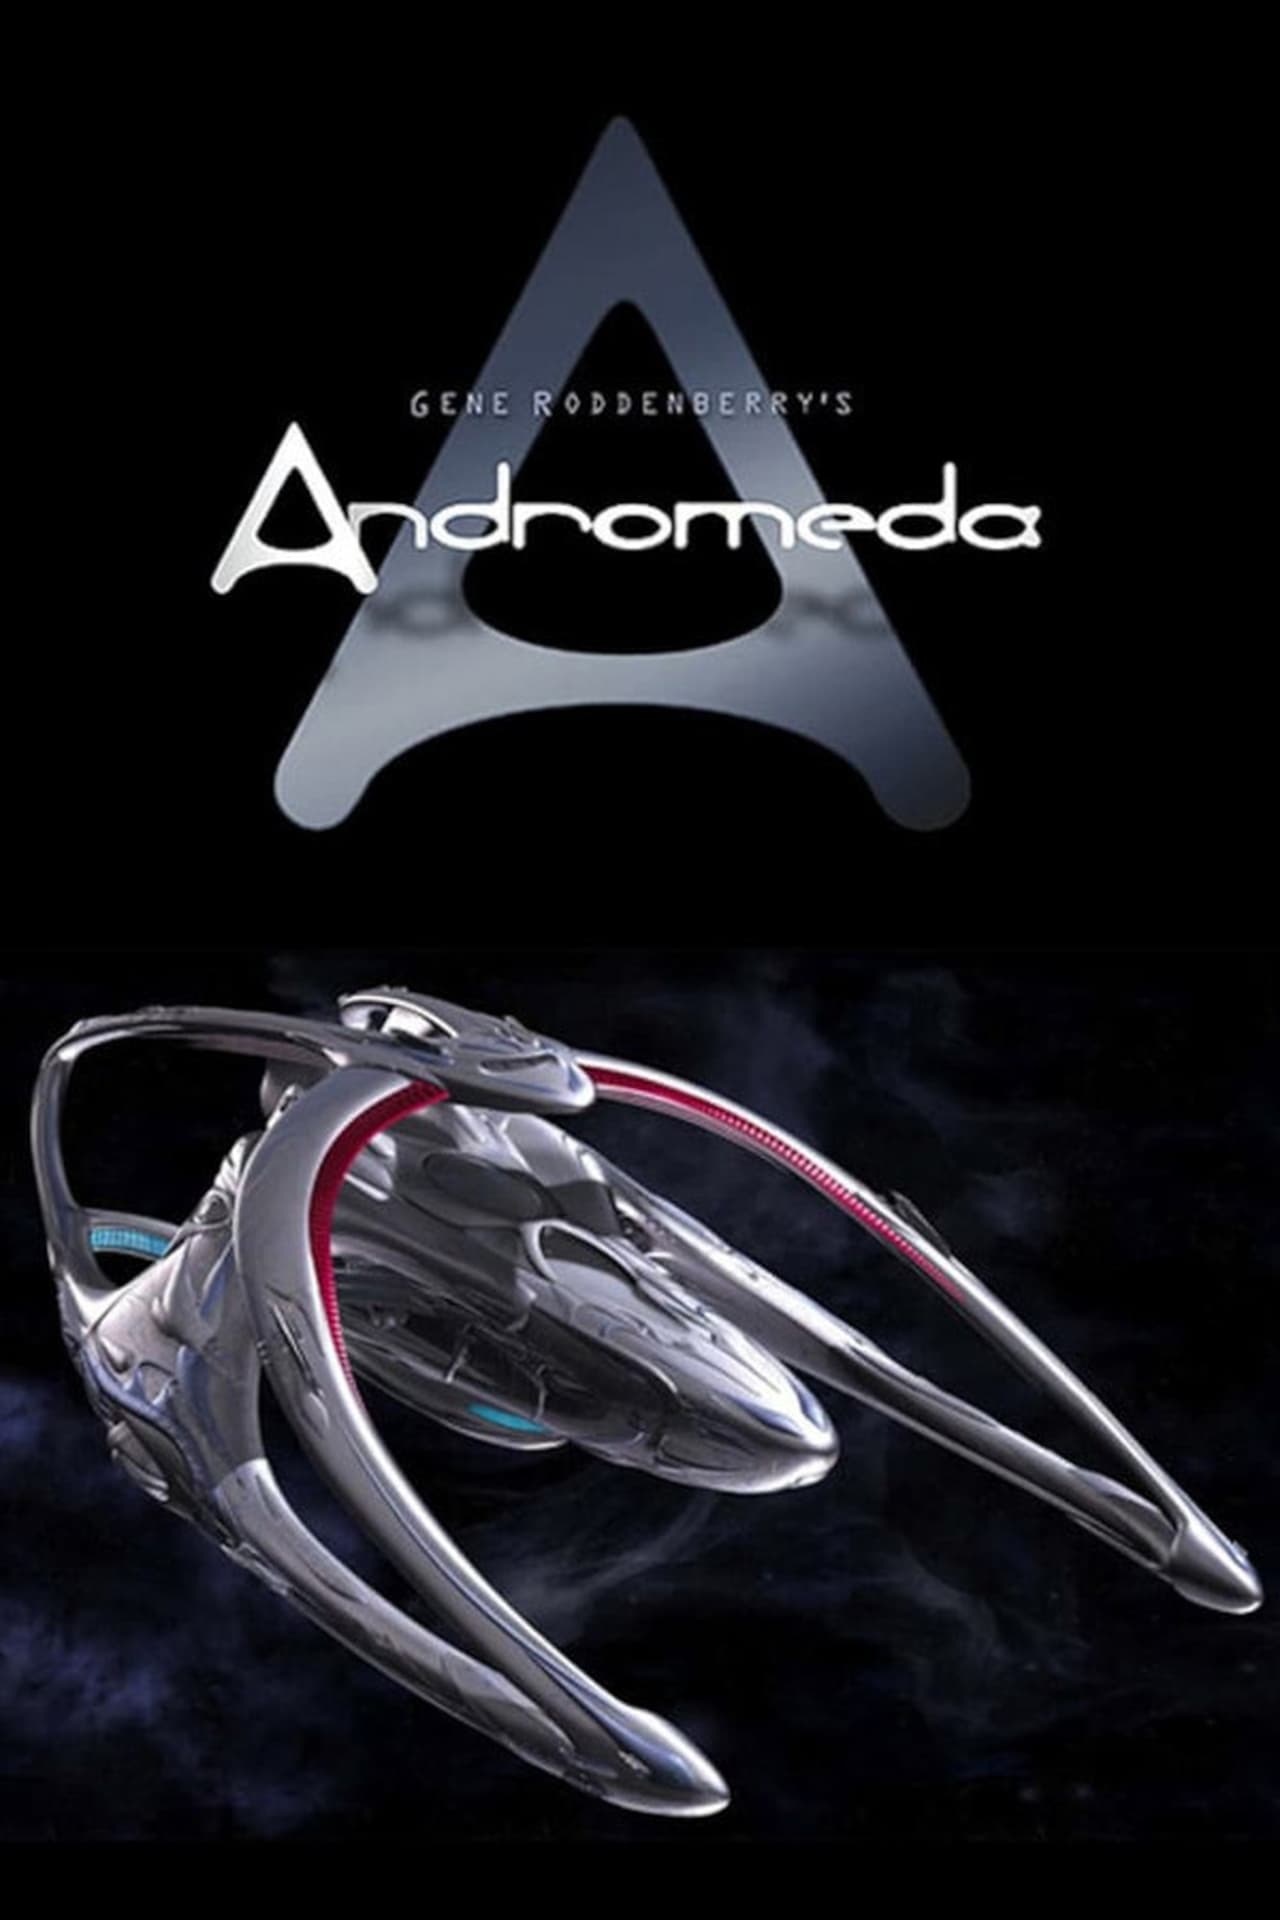 andromeda photoshop series 3 download